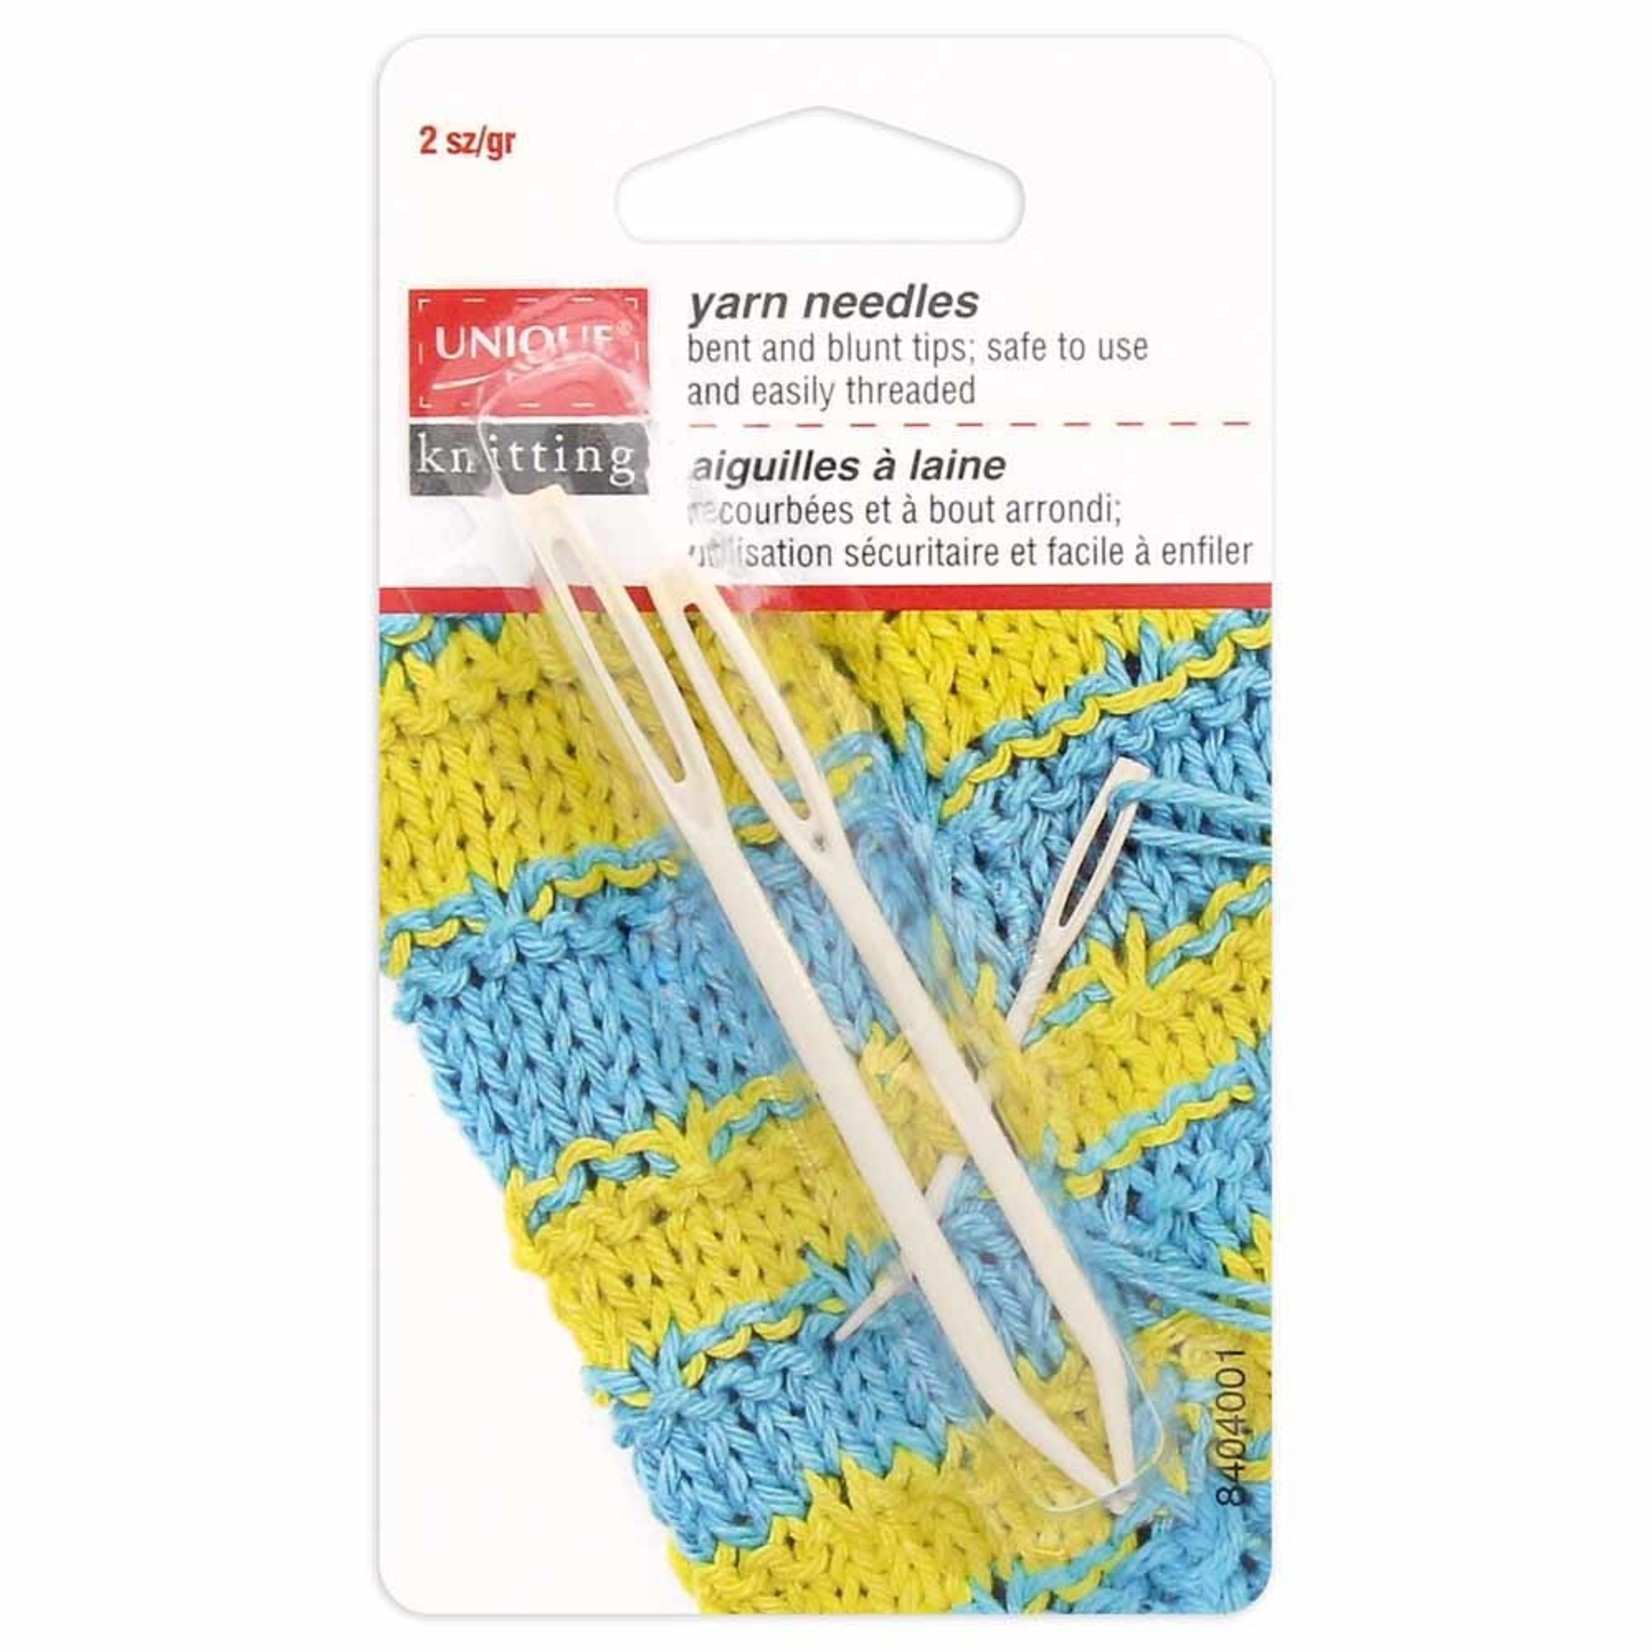 Unique Yarn Darning Needle - Plastic Bent Tip (2pcs)